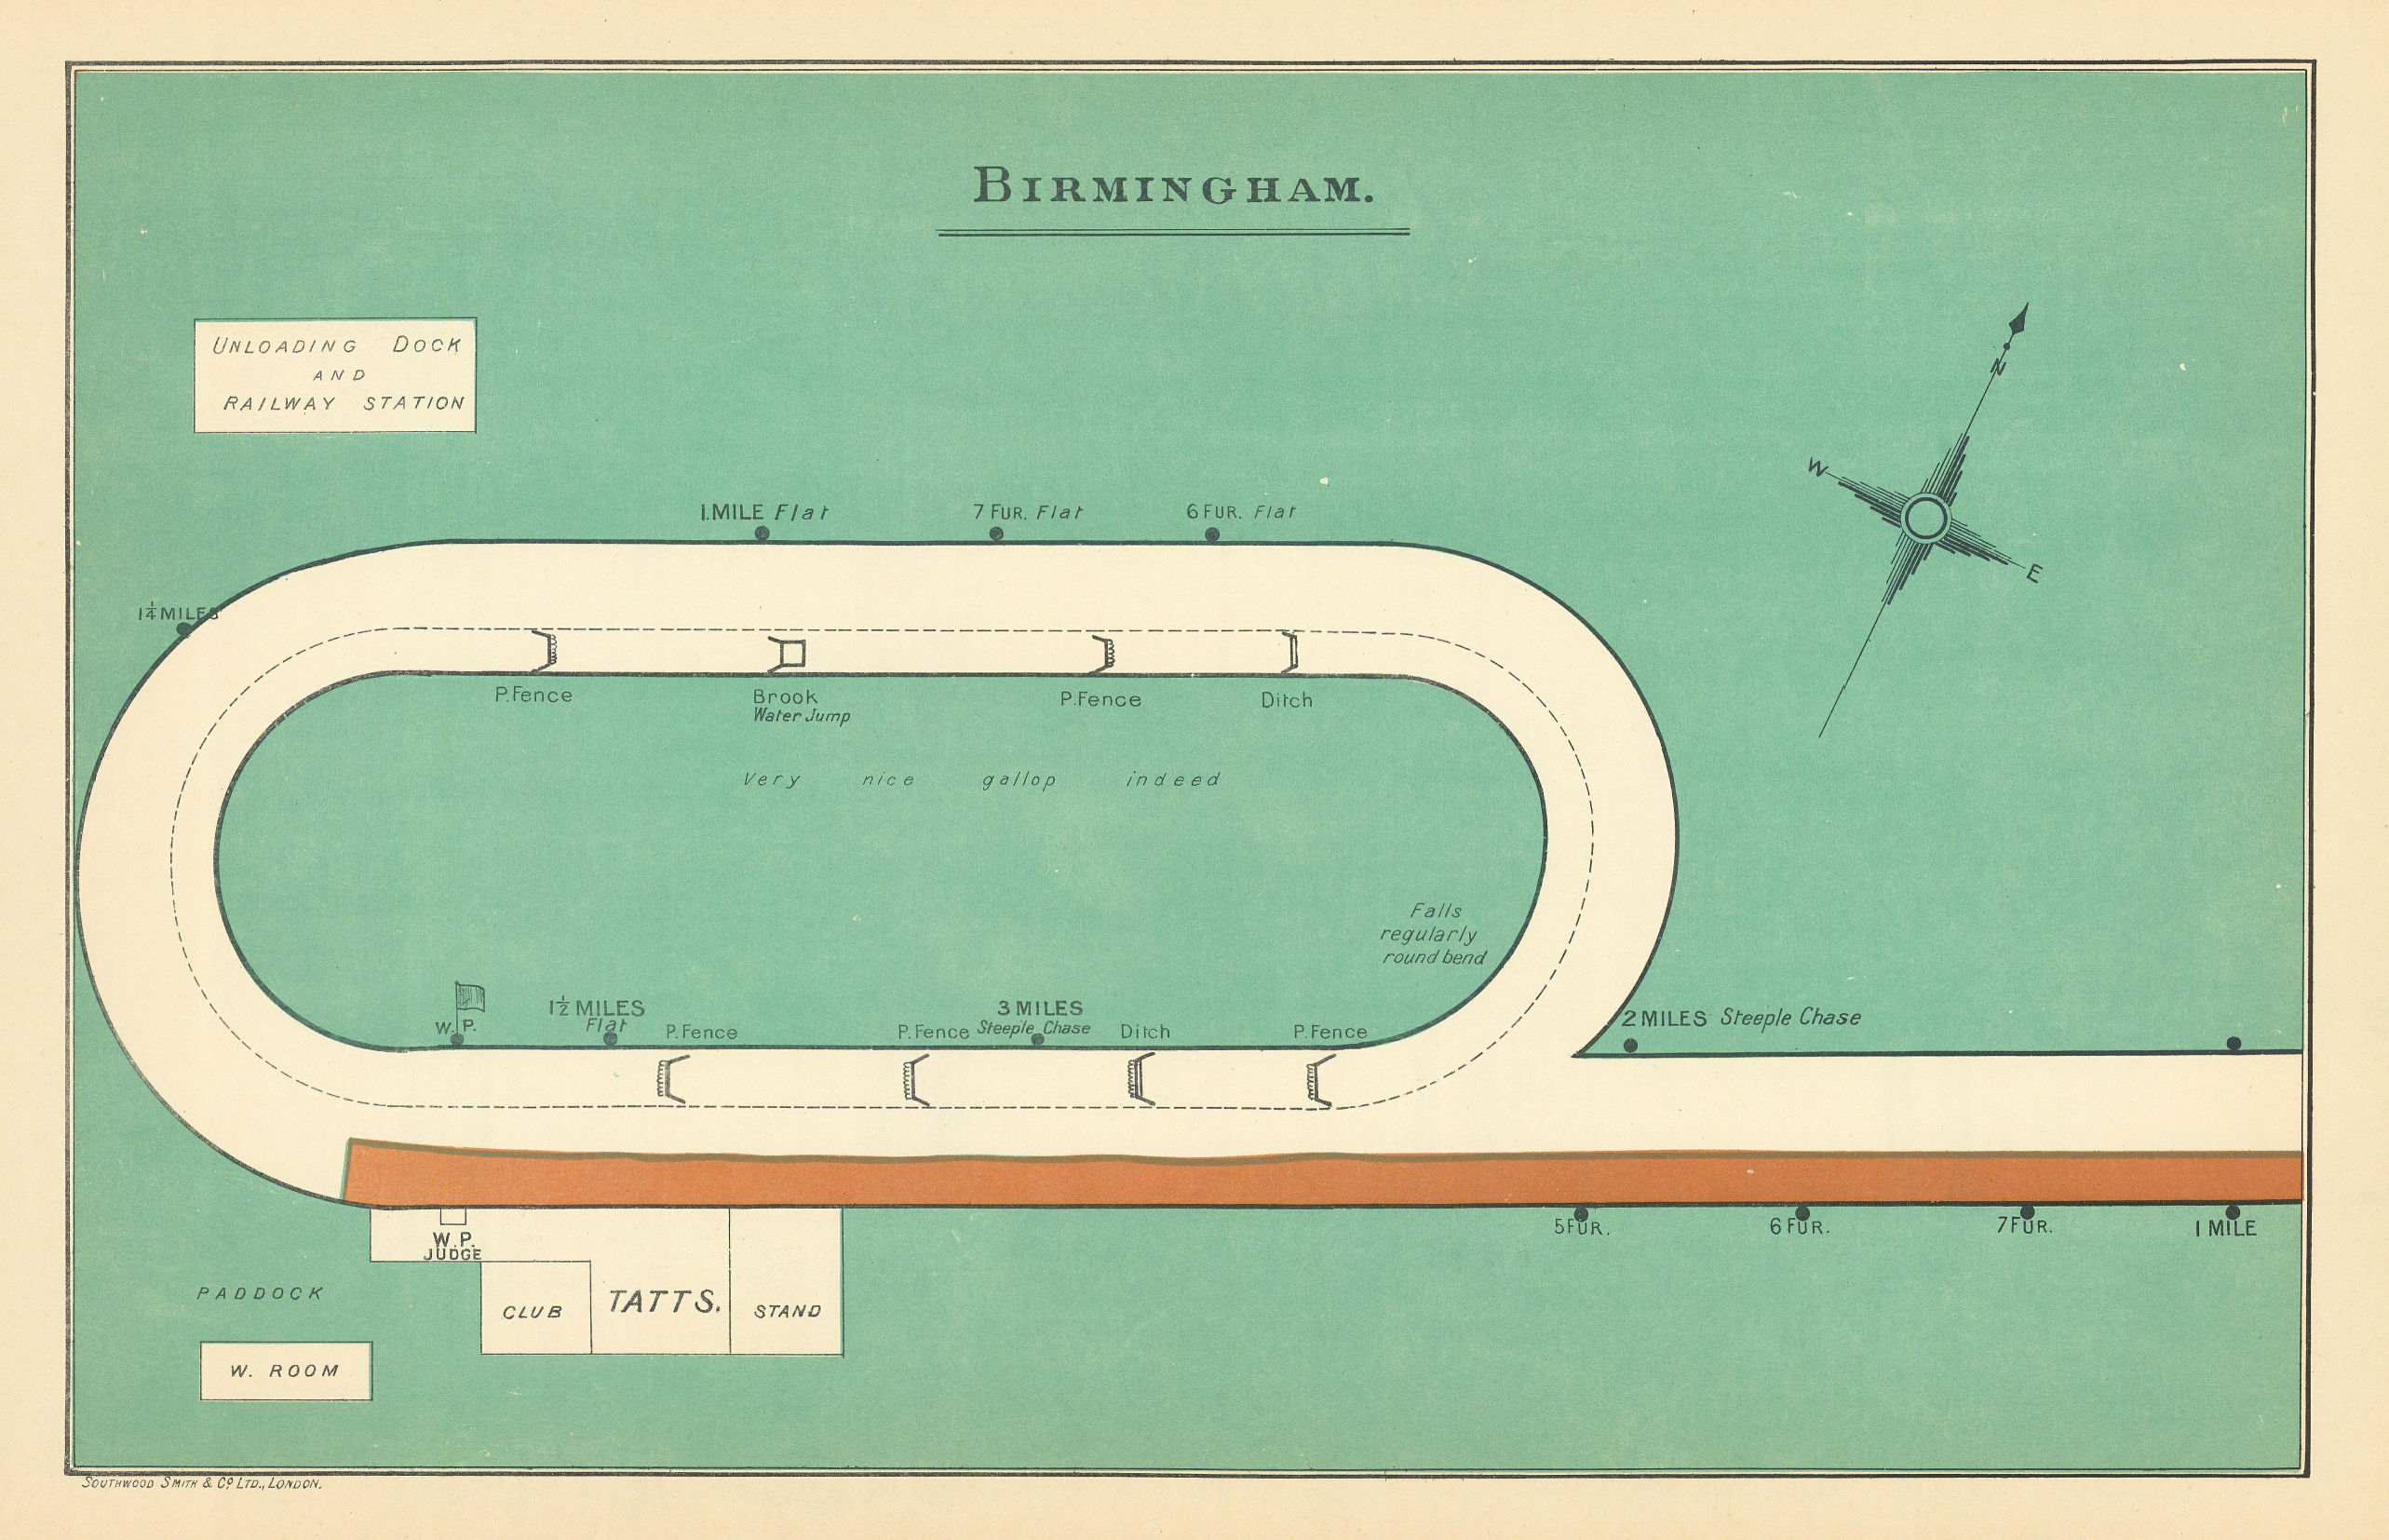 Birmingham racecourse, Birmingham. Closed 1965. BAYLES 1903 old antique map